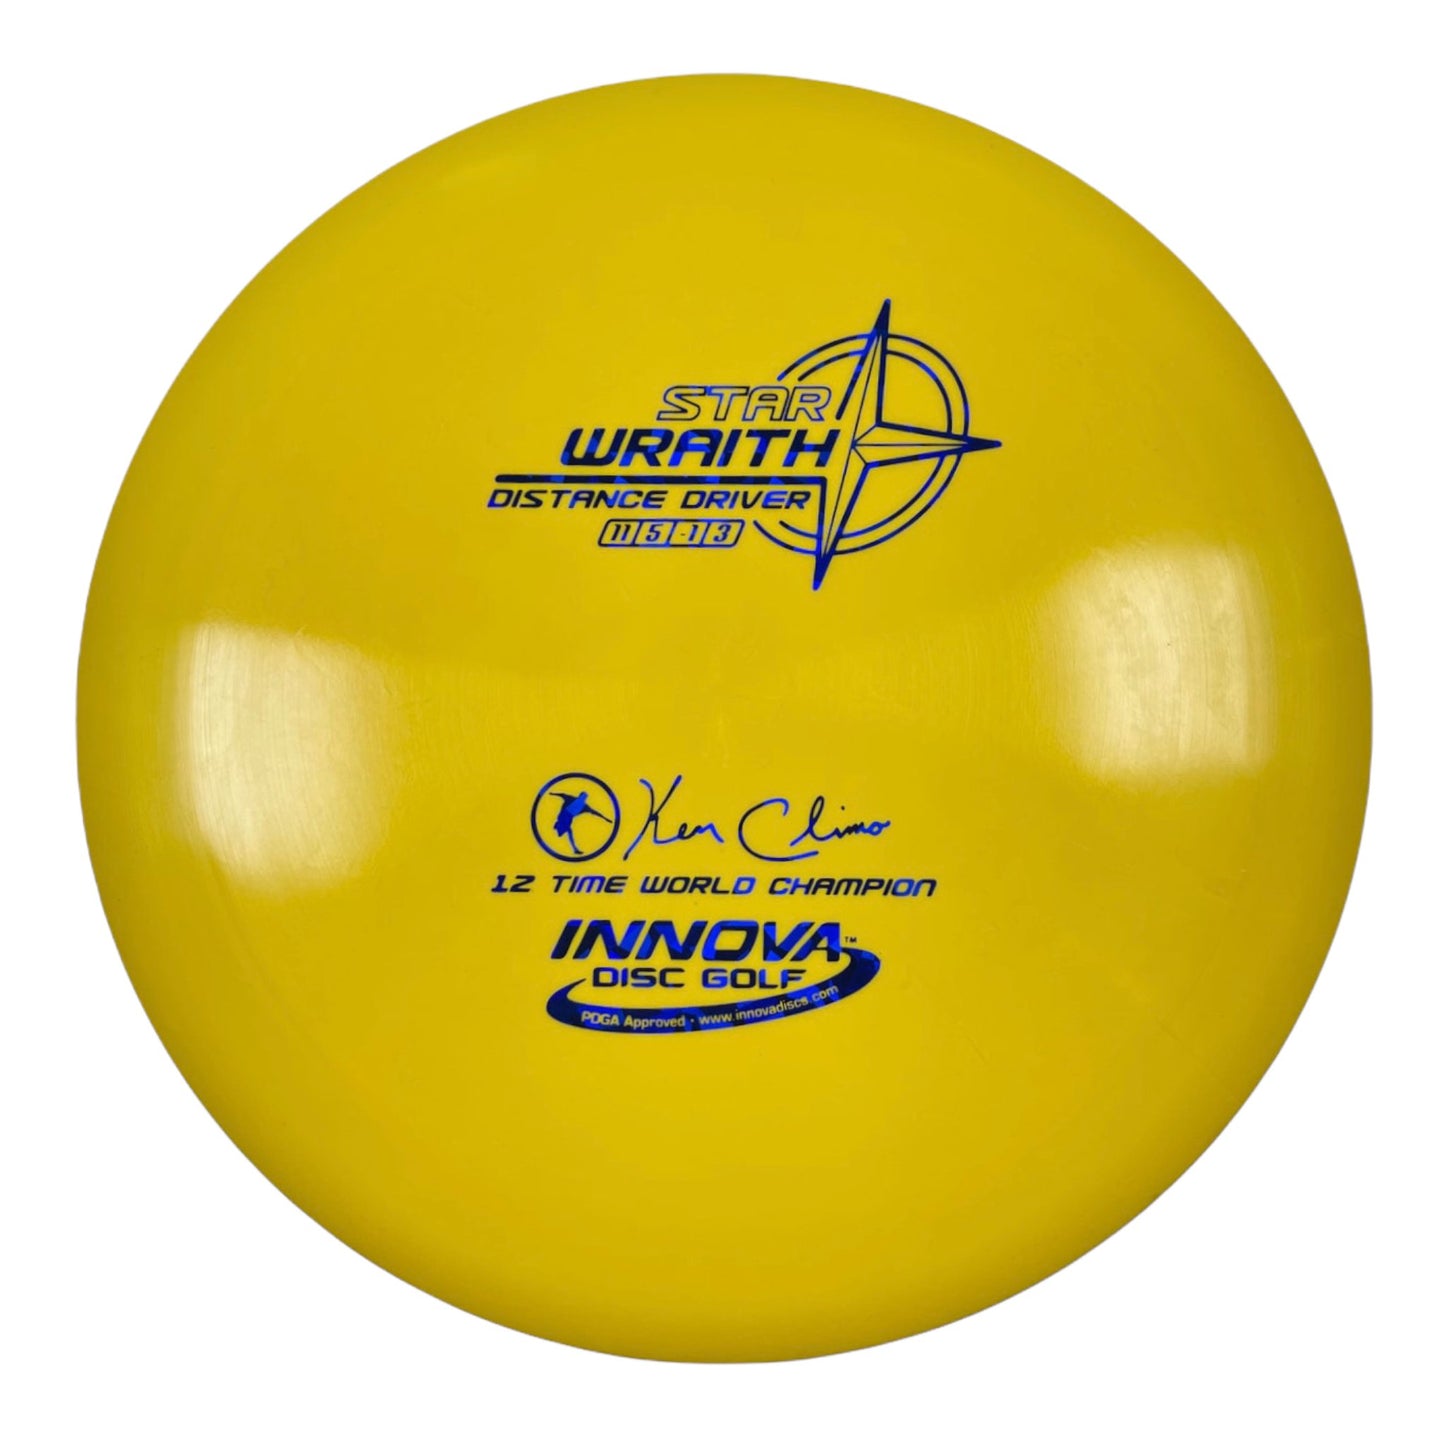 Innova Champion Discs Wraith | Star | Yellow/Blue 175g Disc Golf